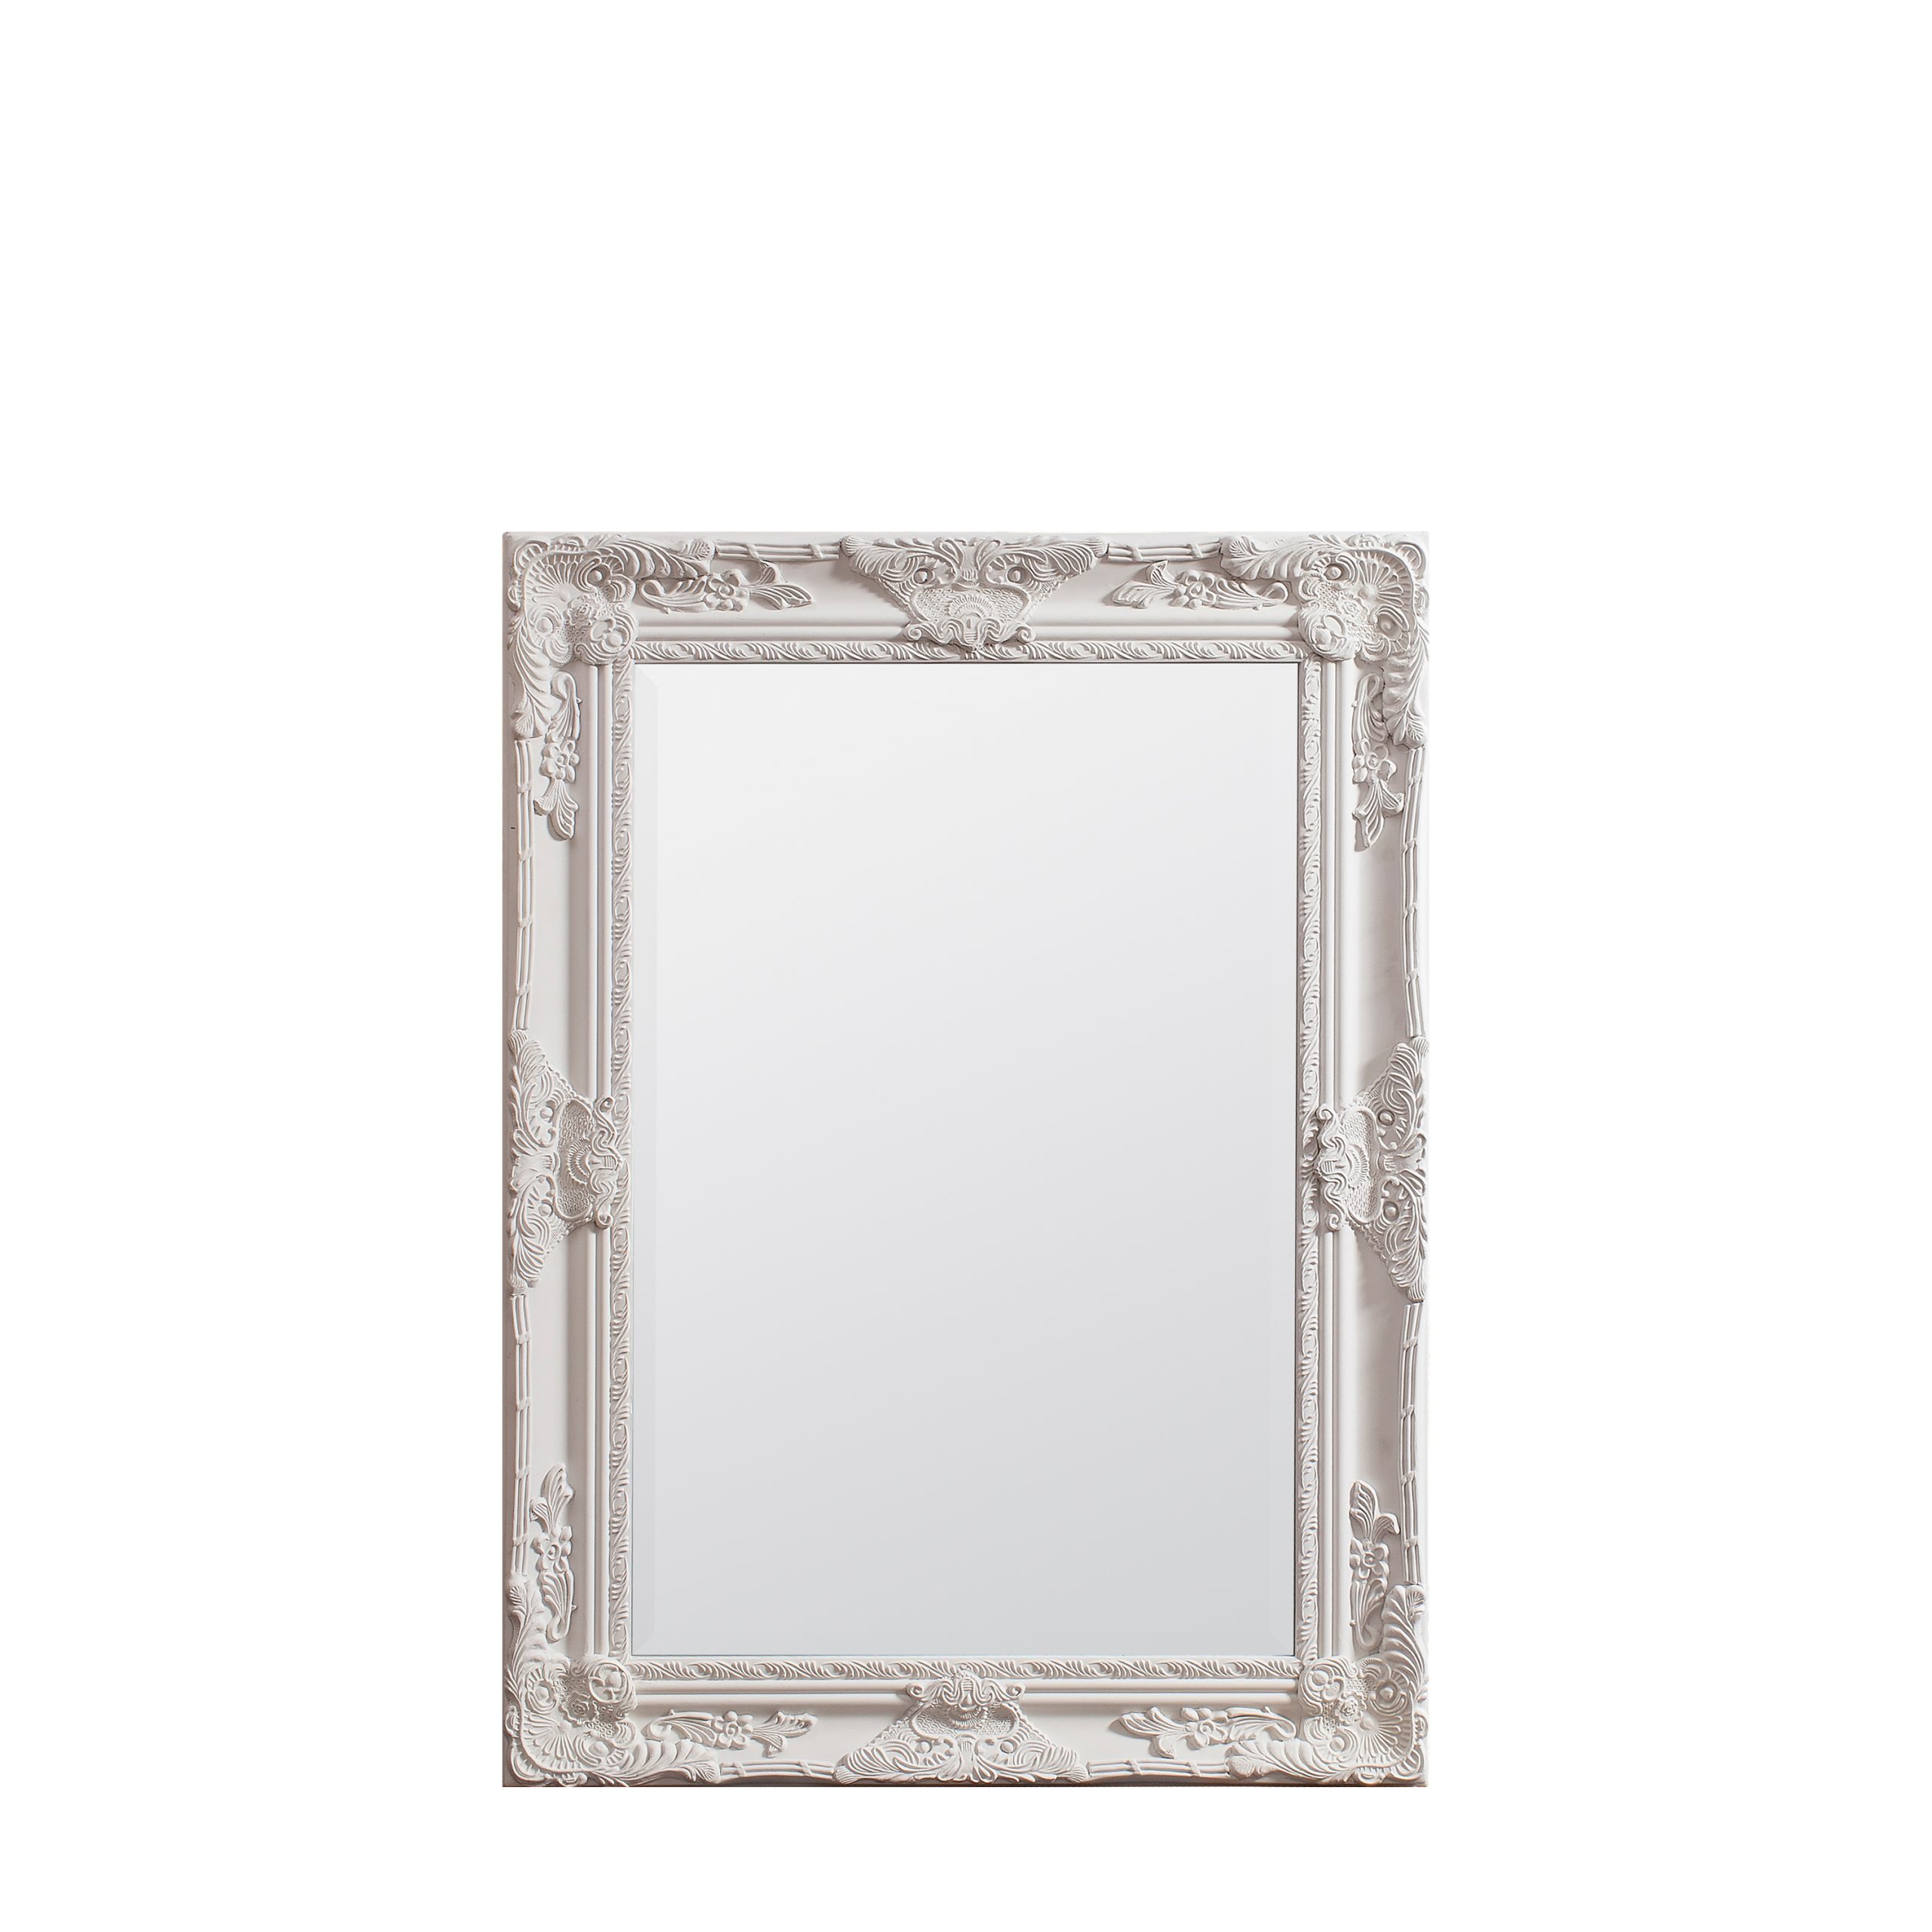 Gallery Direct Hampshire Rectangle Mirror Cream